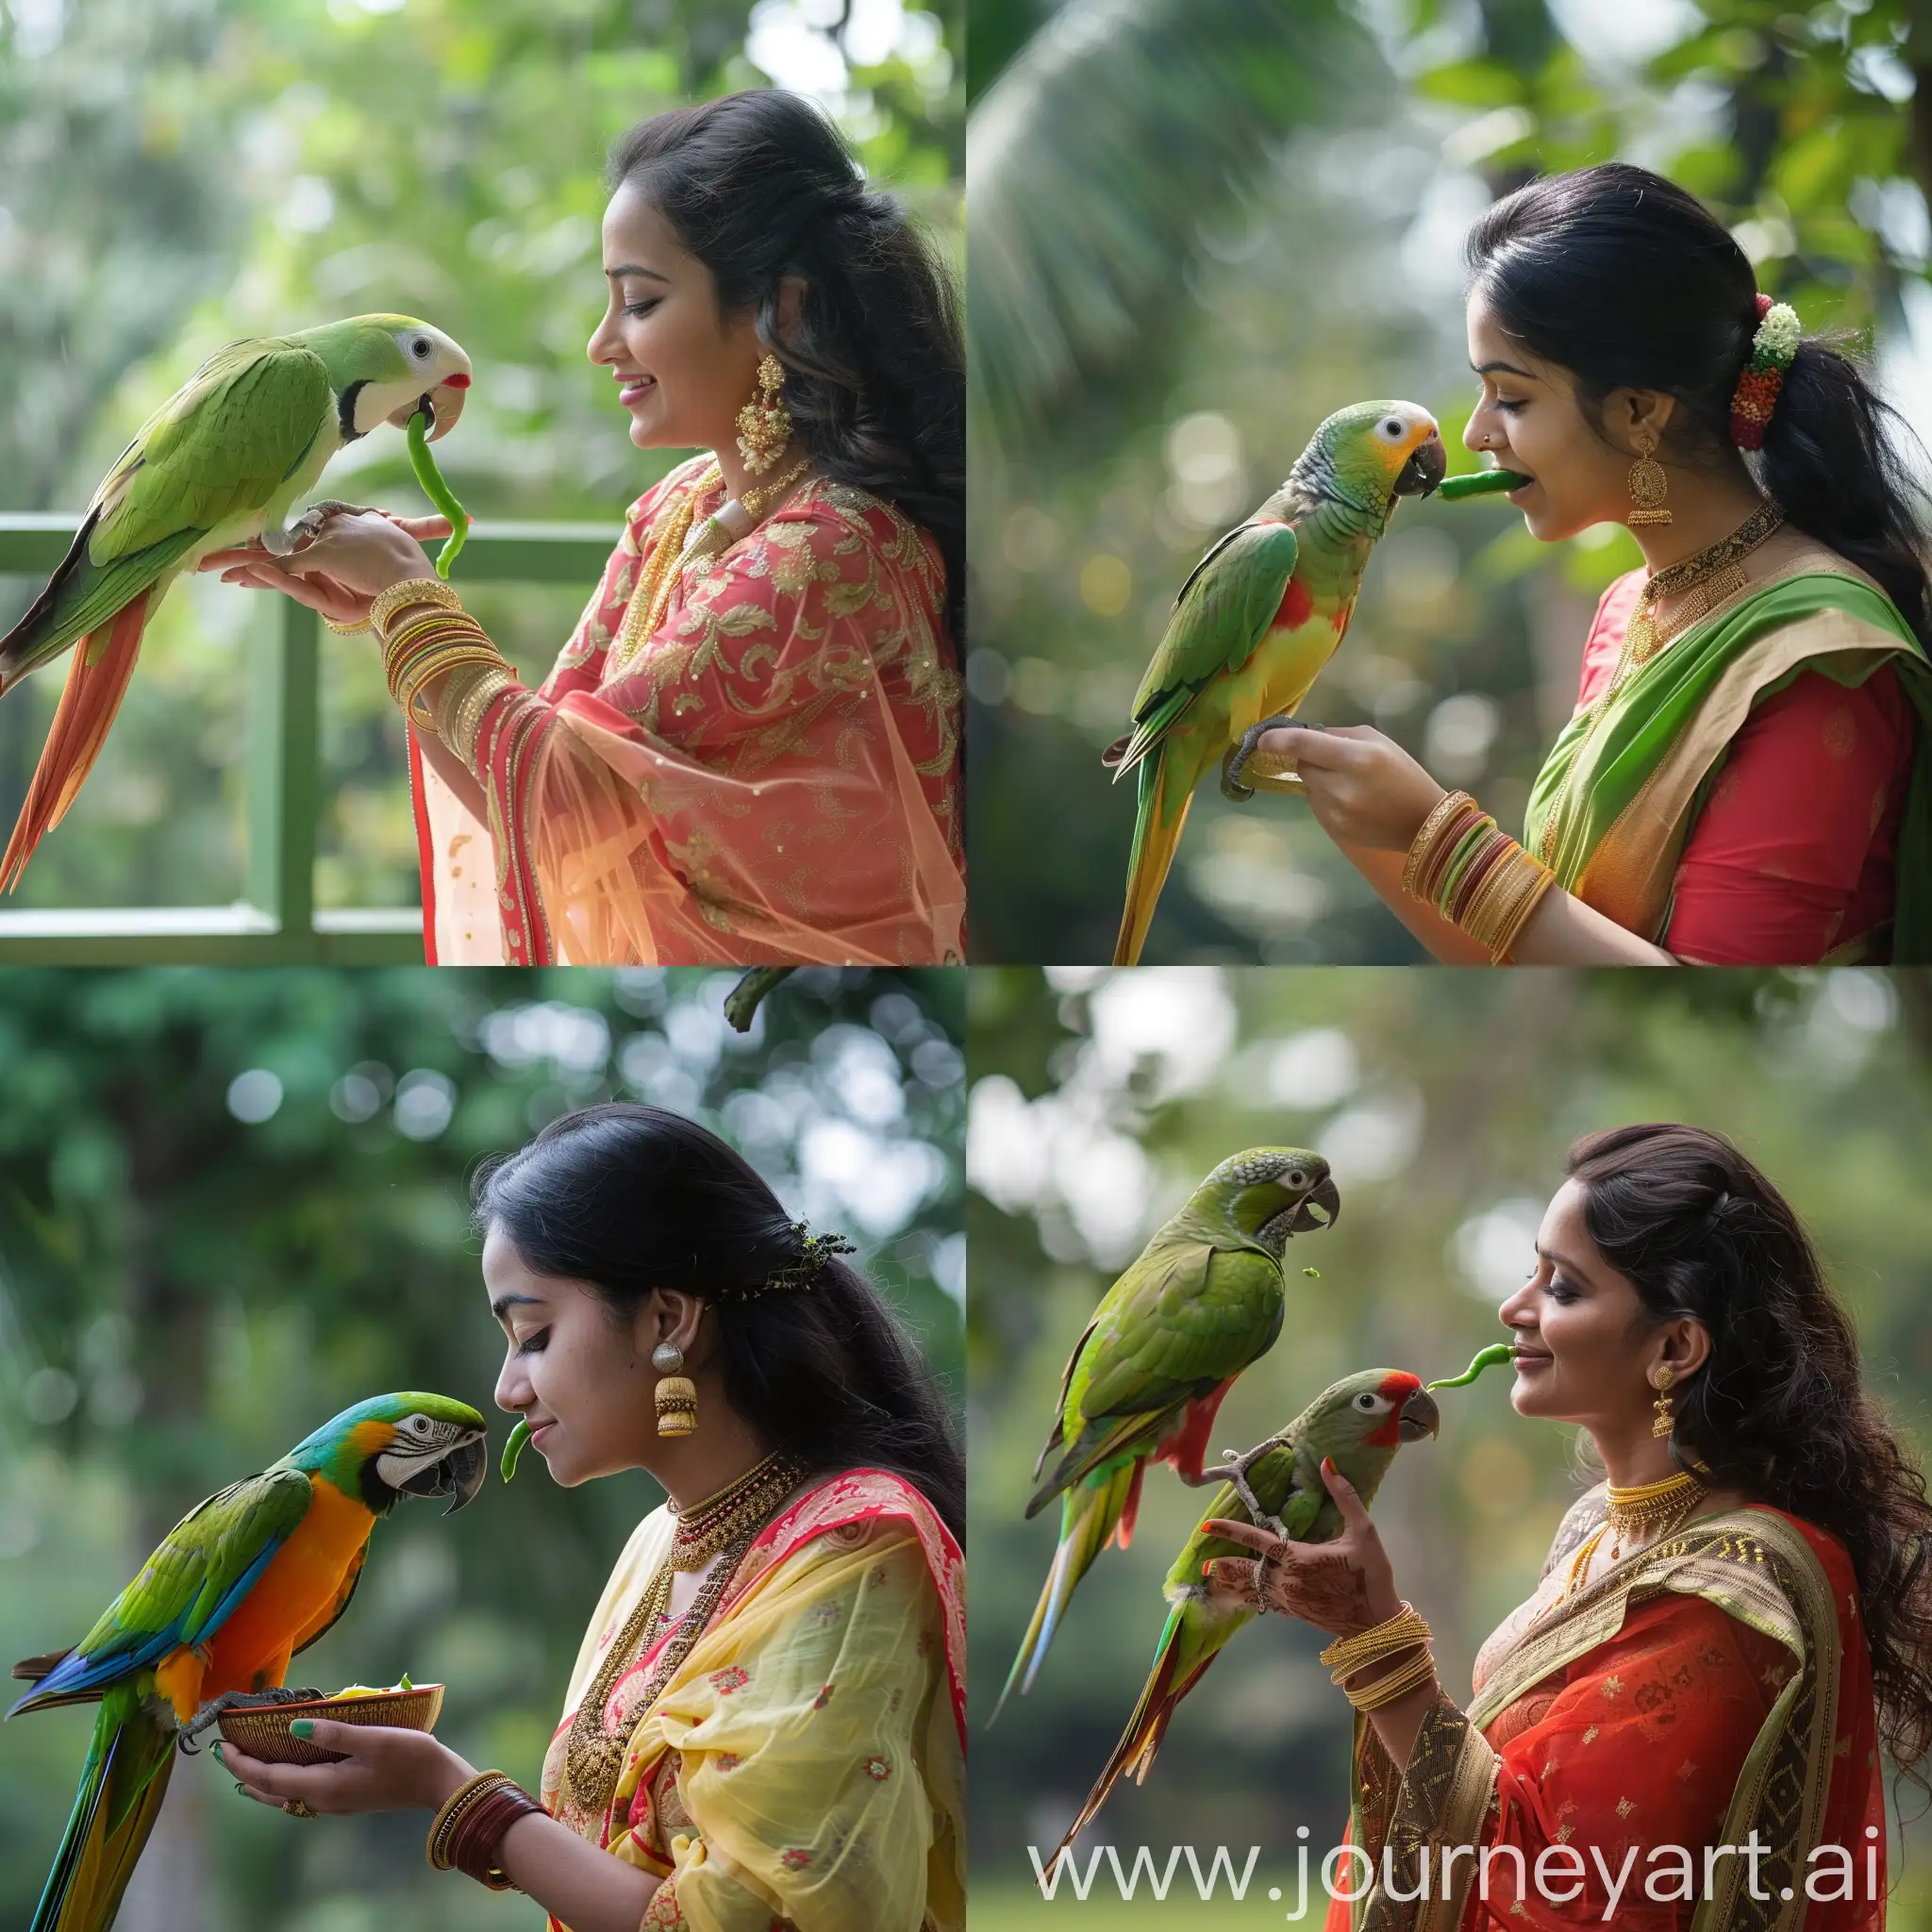 A beautiful bengali lady feeding a parrot the green chili